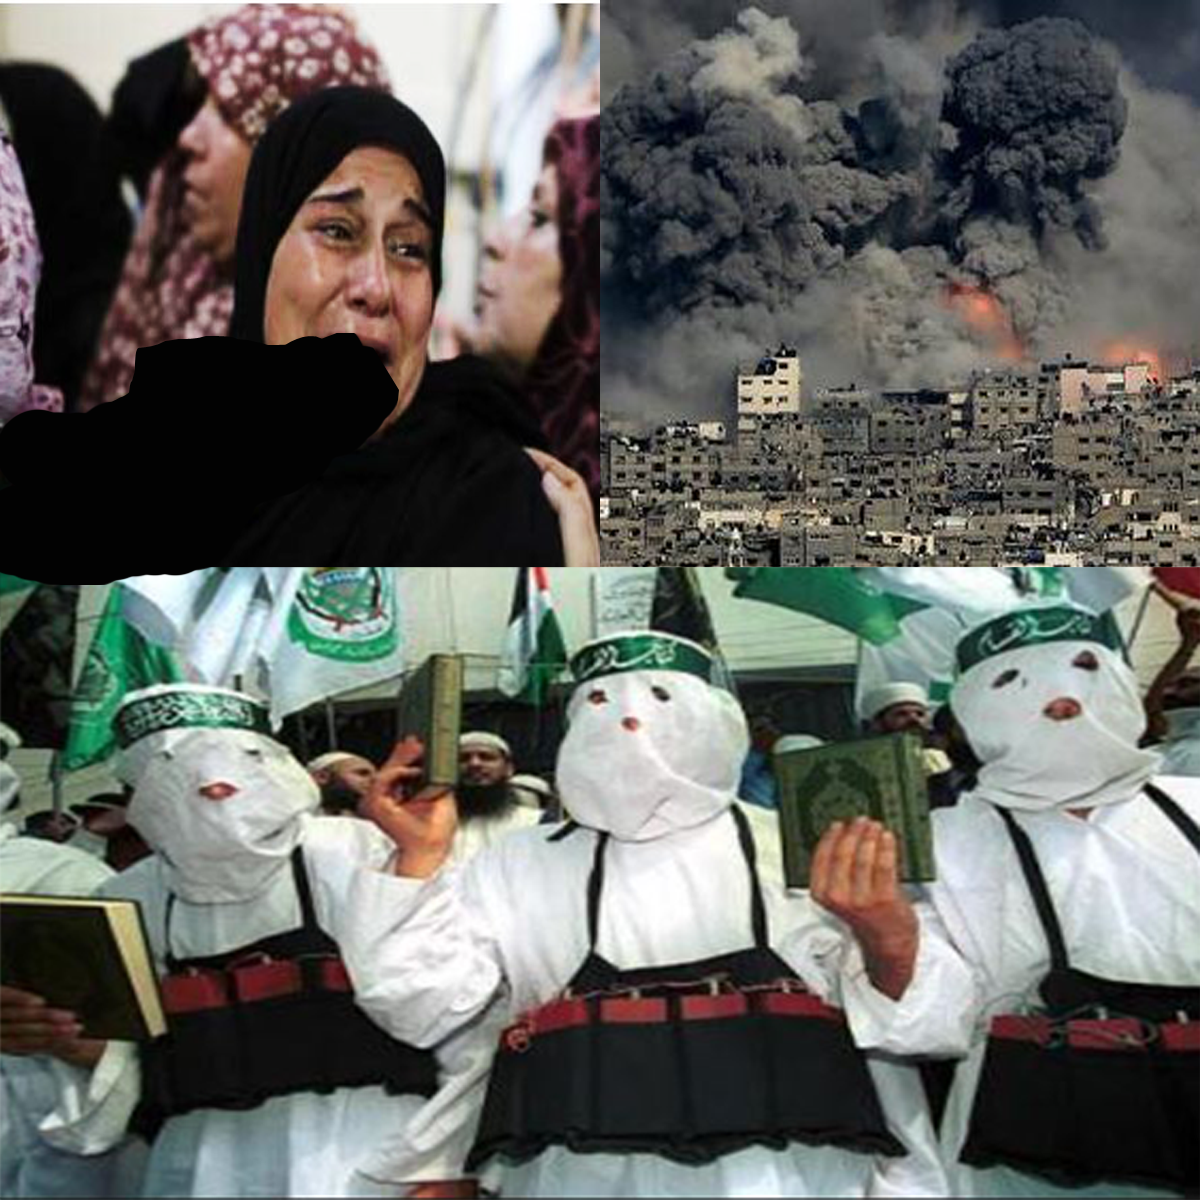 Hamas suffering